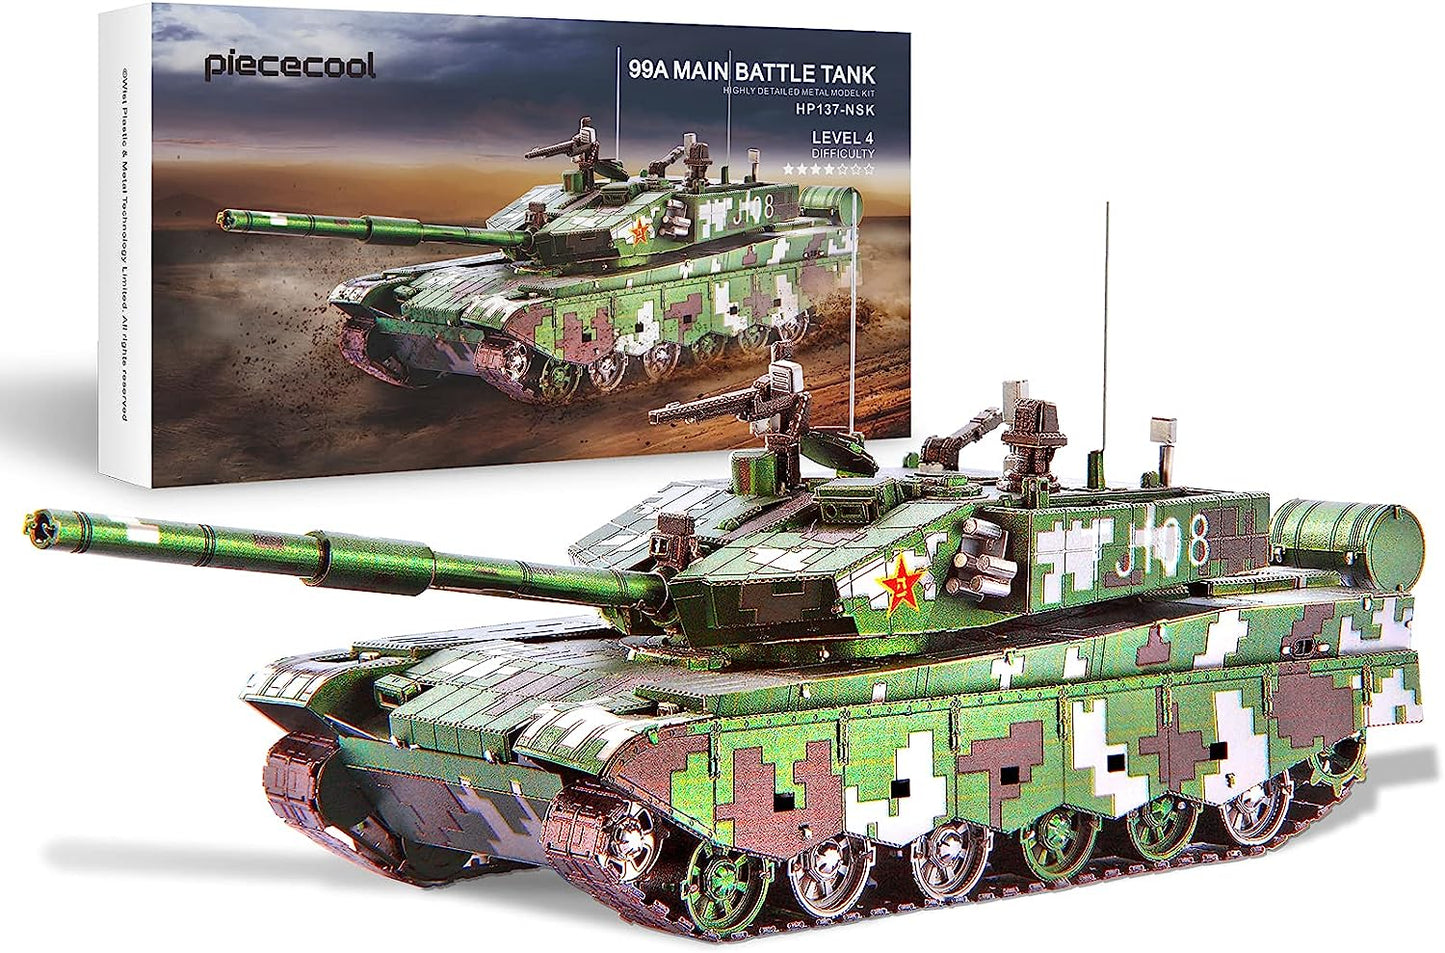 Piececool 99A Main Battle Tank Military Model kit, 233Pcs